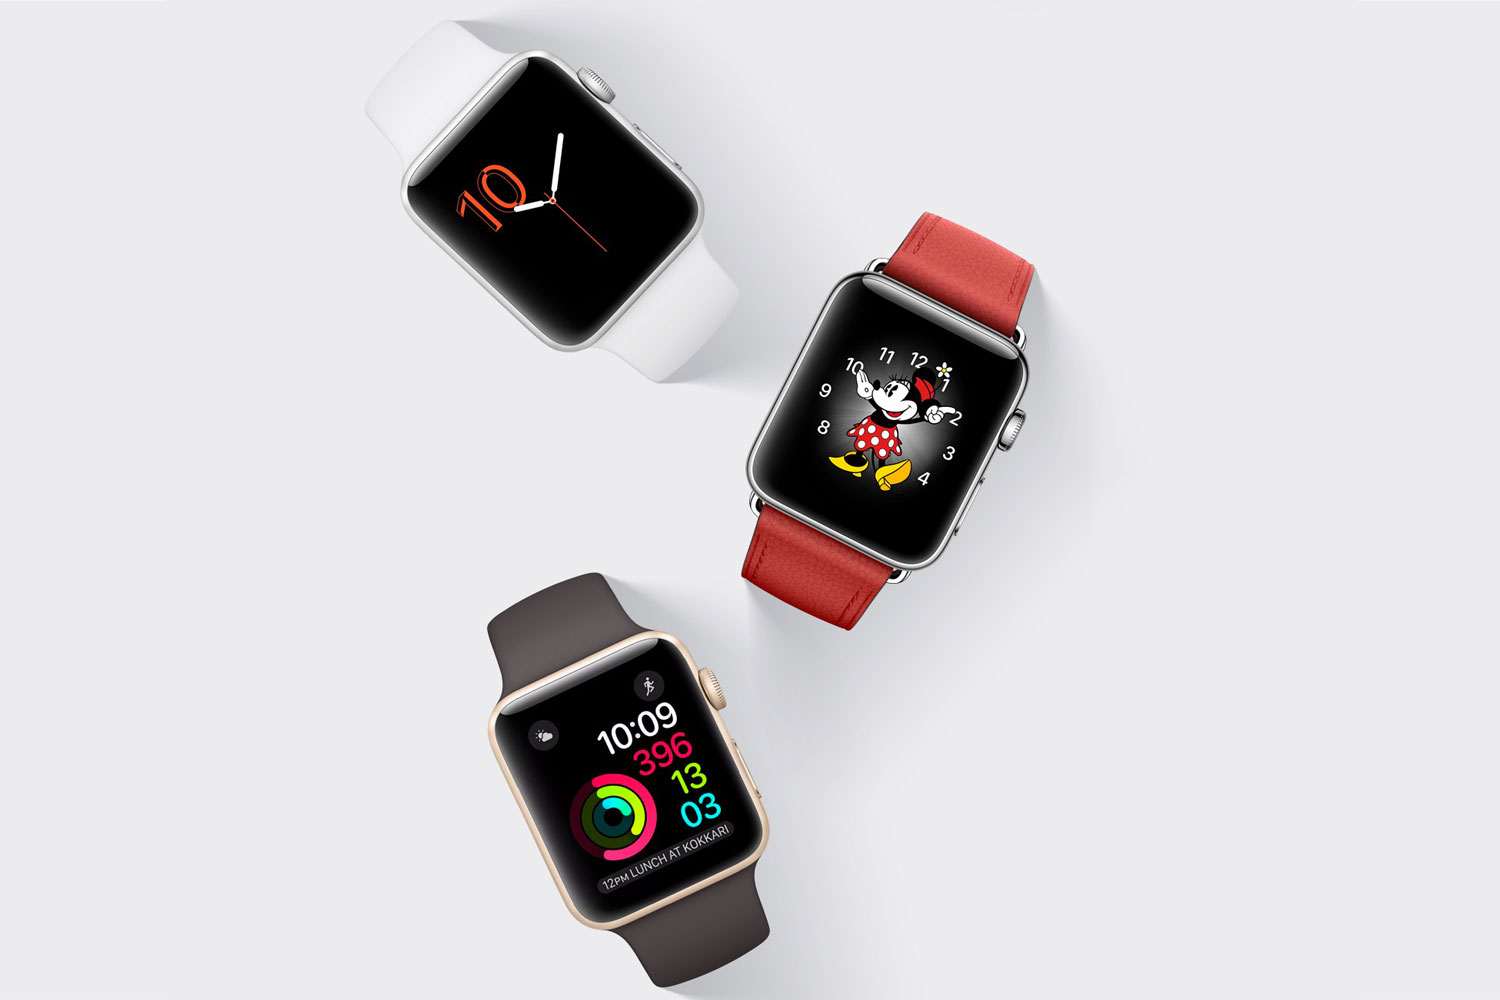 Apple Watch Series 2 News: Specs, Price, Release Date | Digital Trends